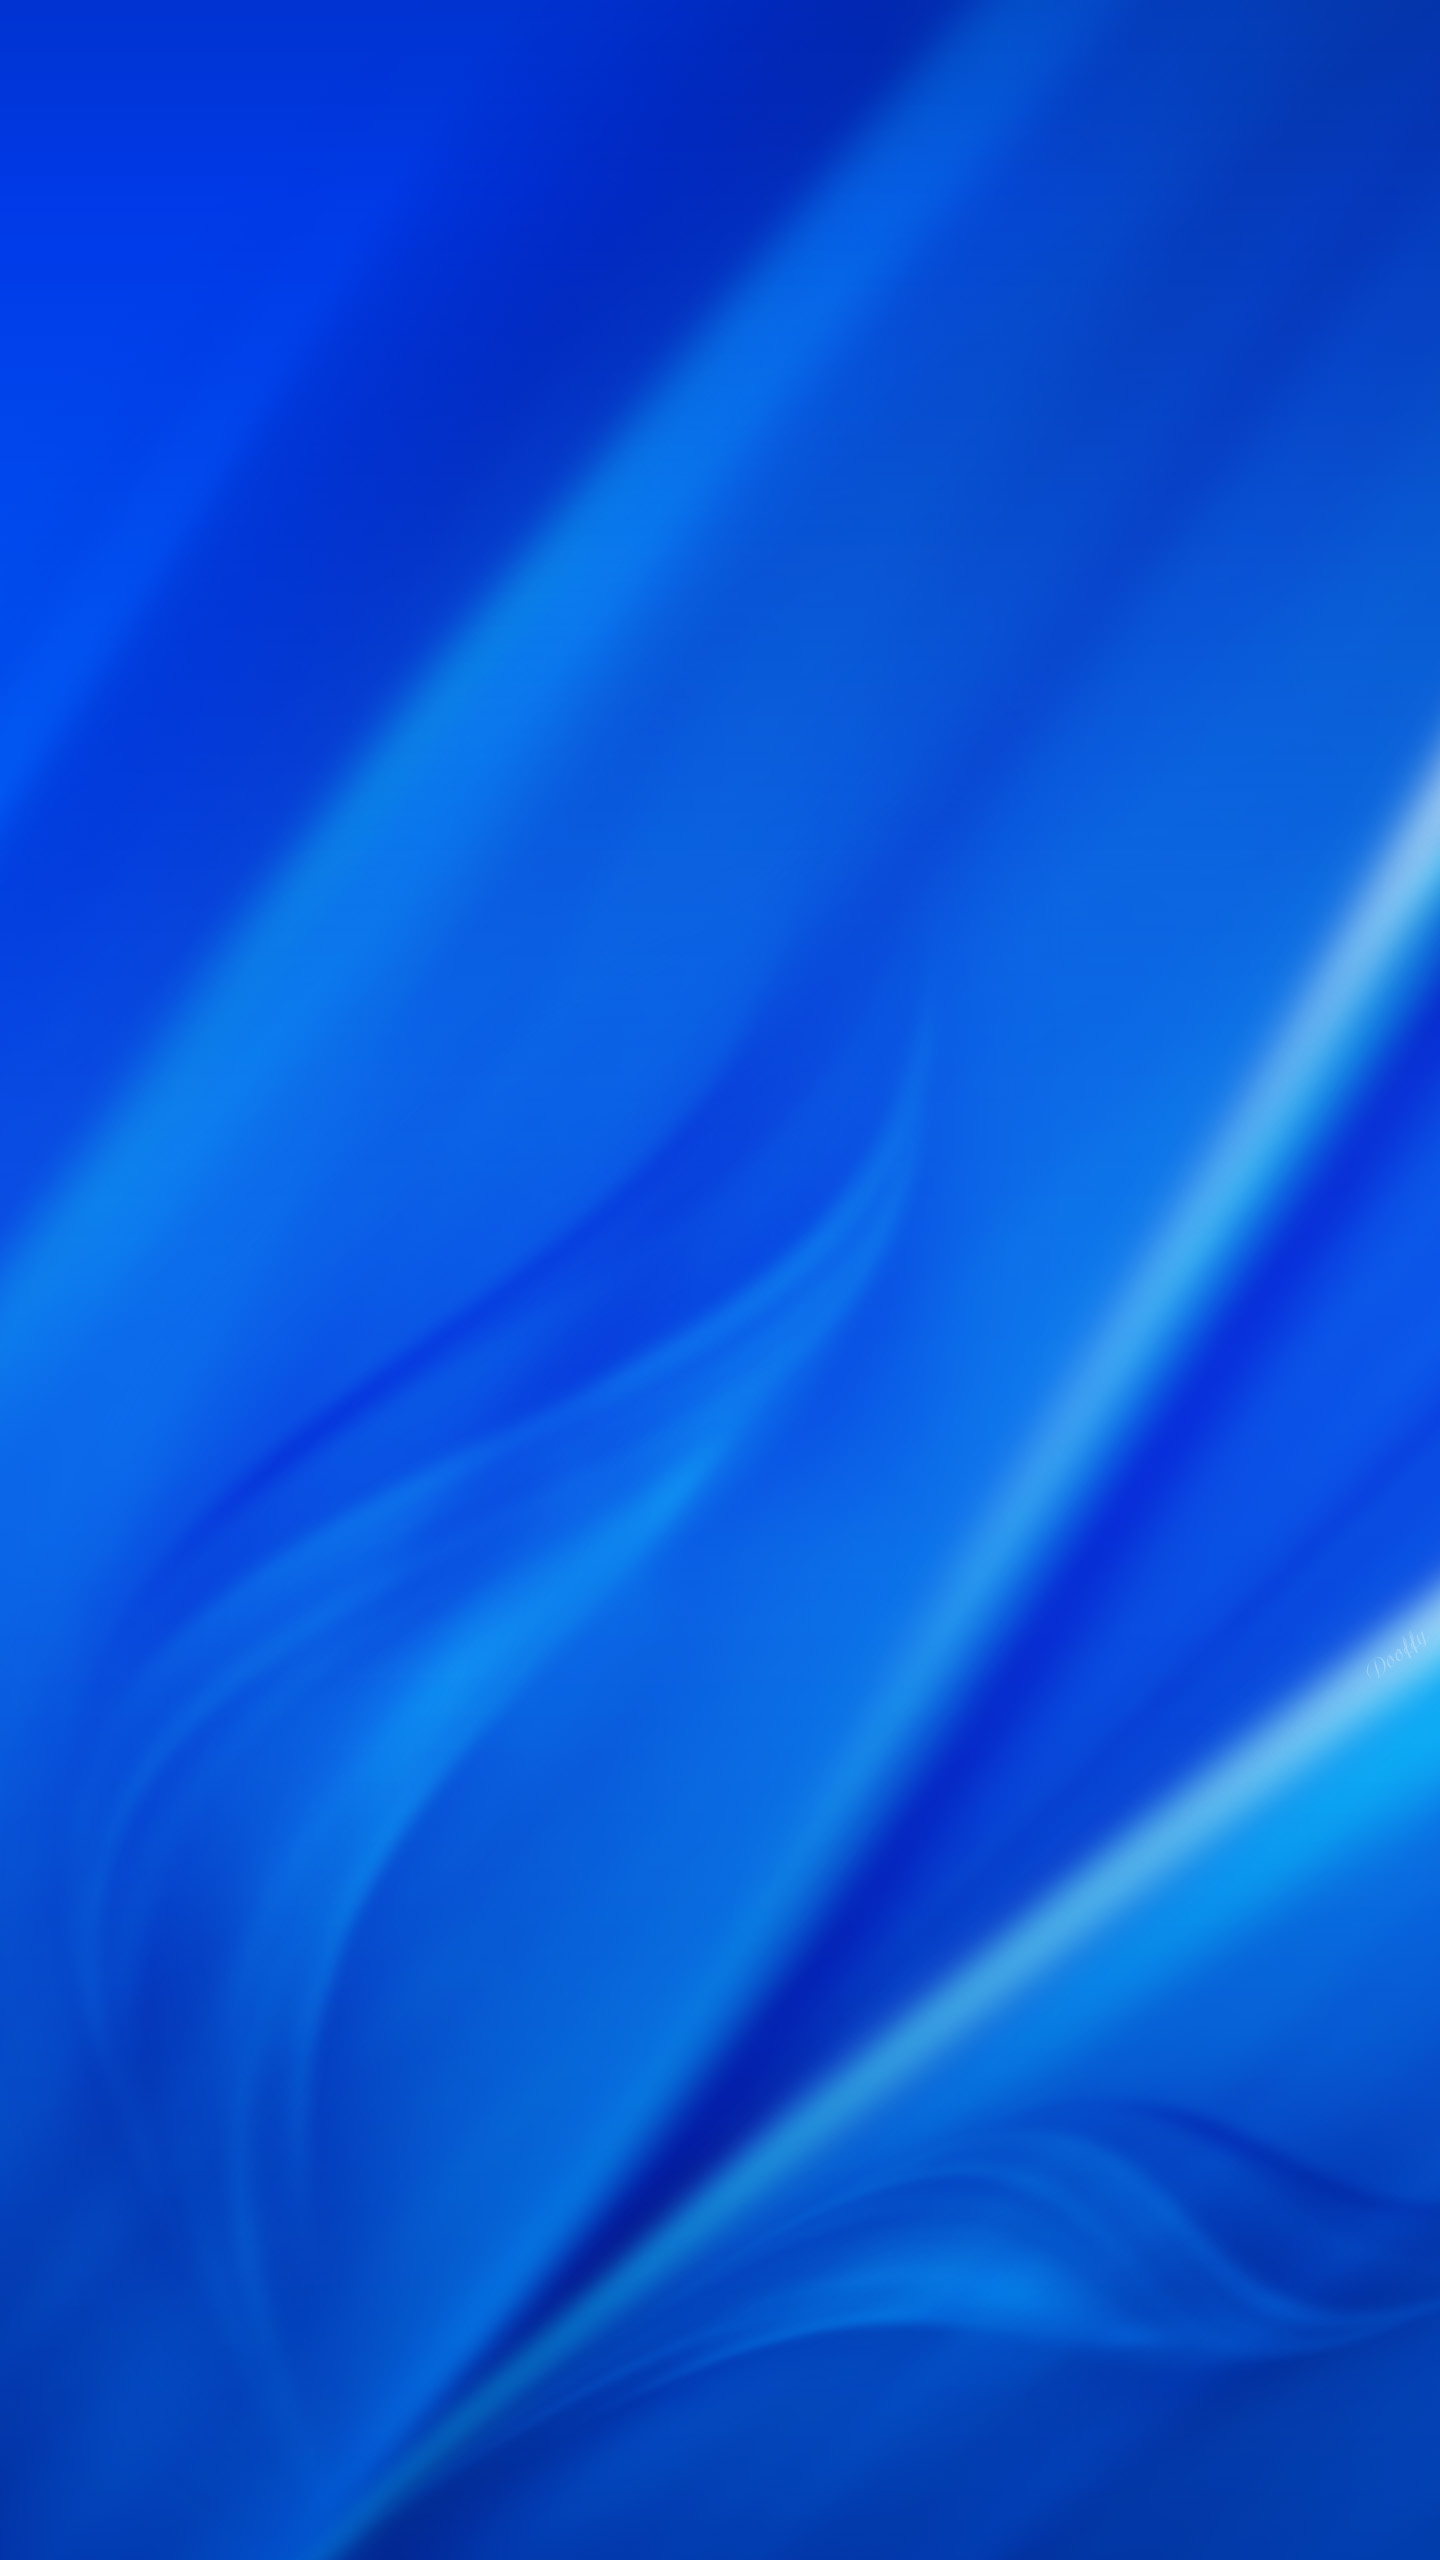 fonds d'écran mobiles hd pour samsung,bleu,bleu électrique,aqua,bleu cobalt,ciel